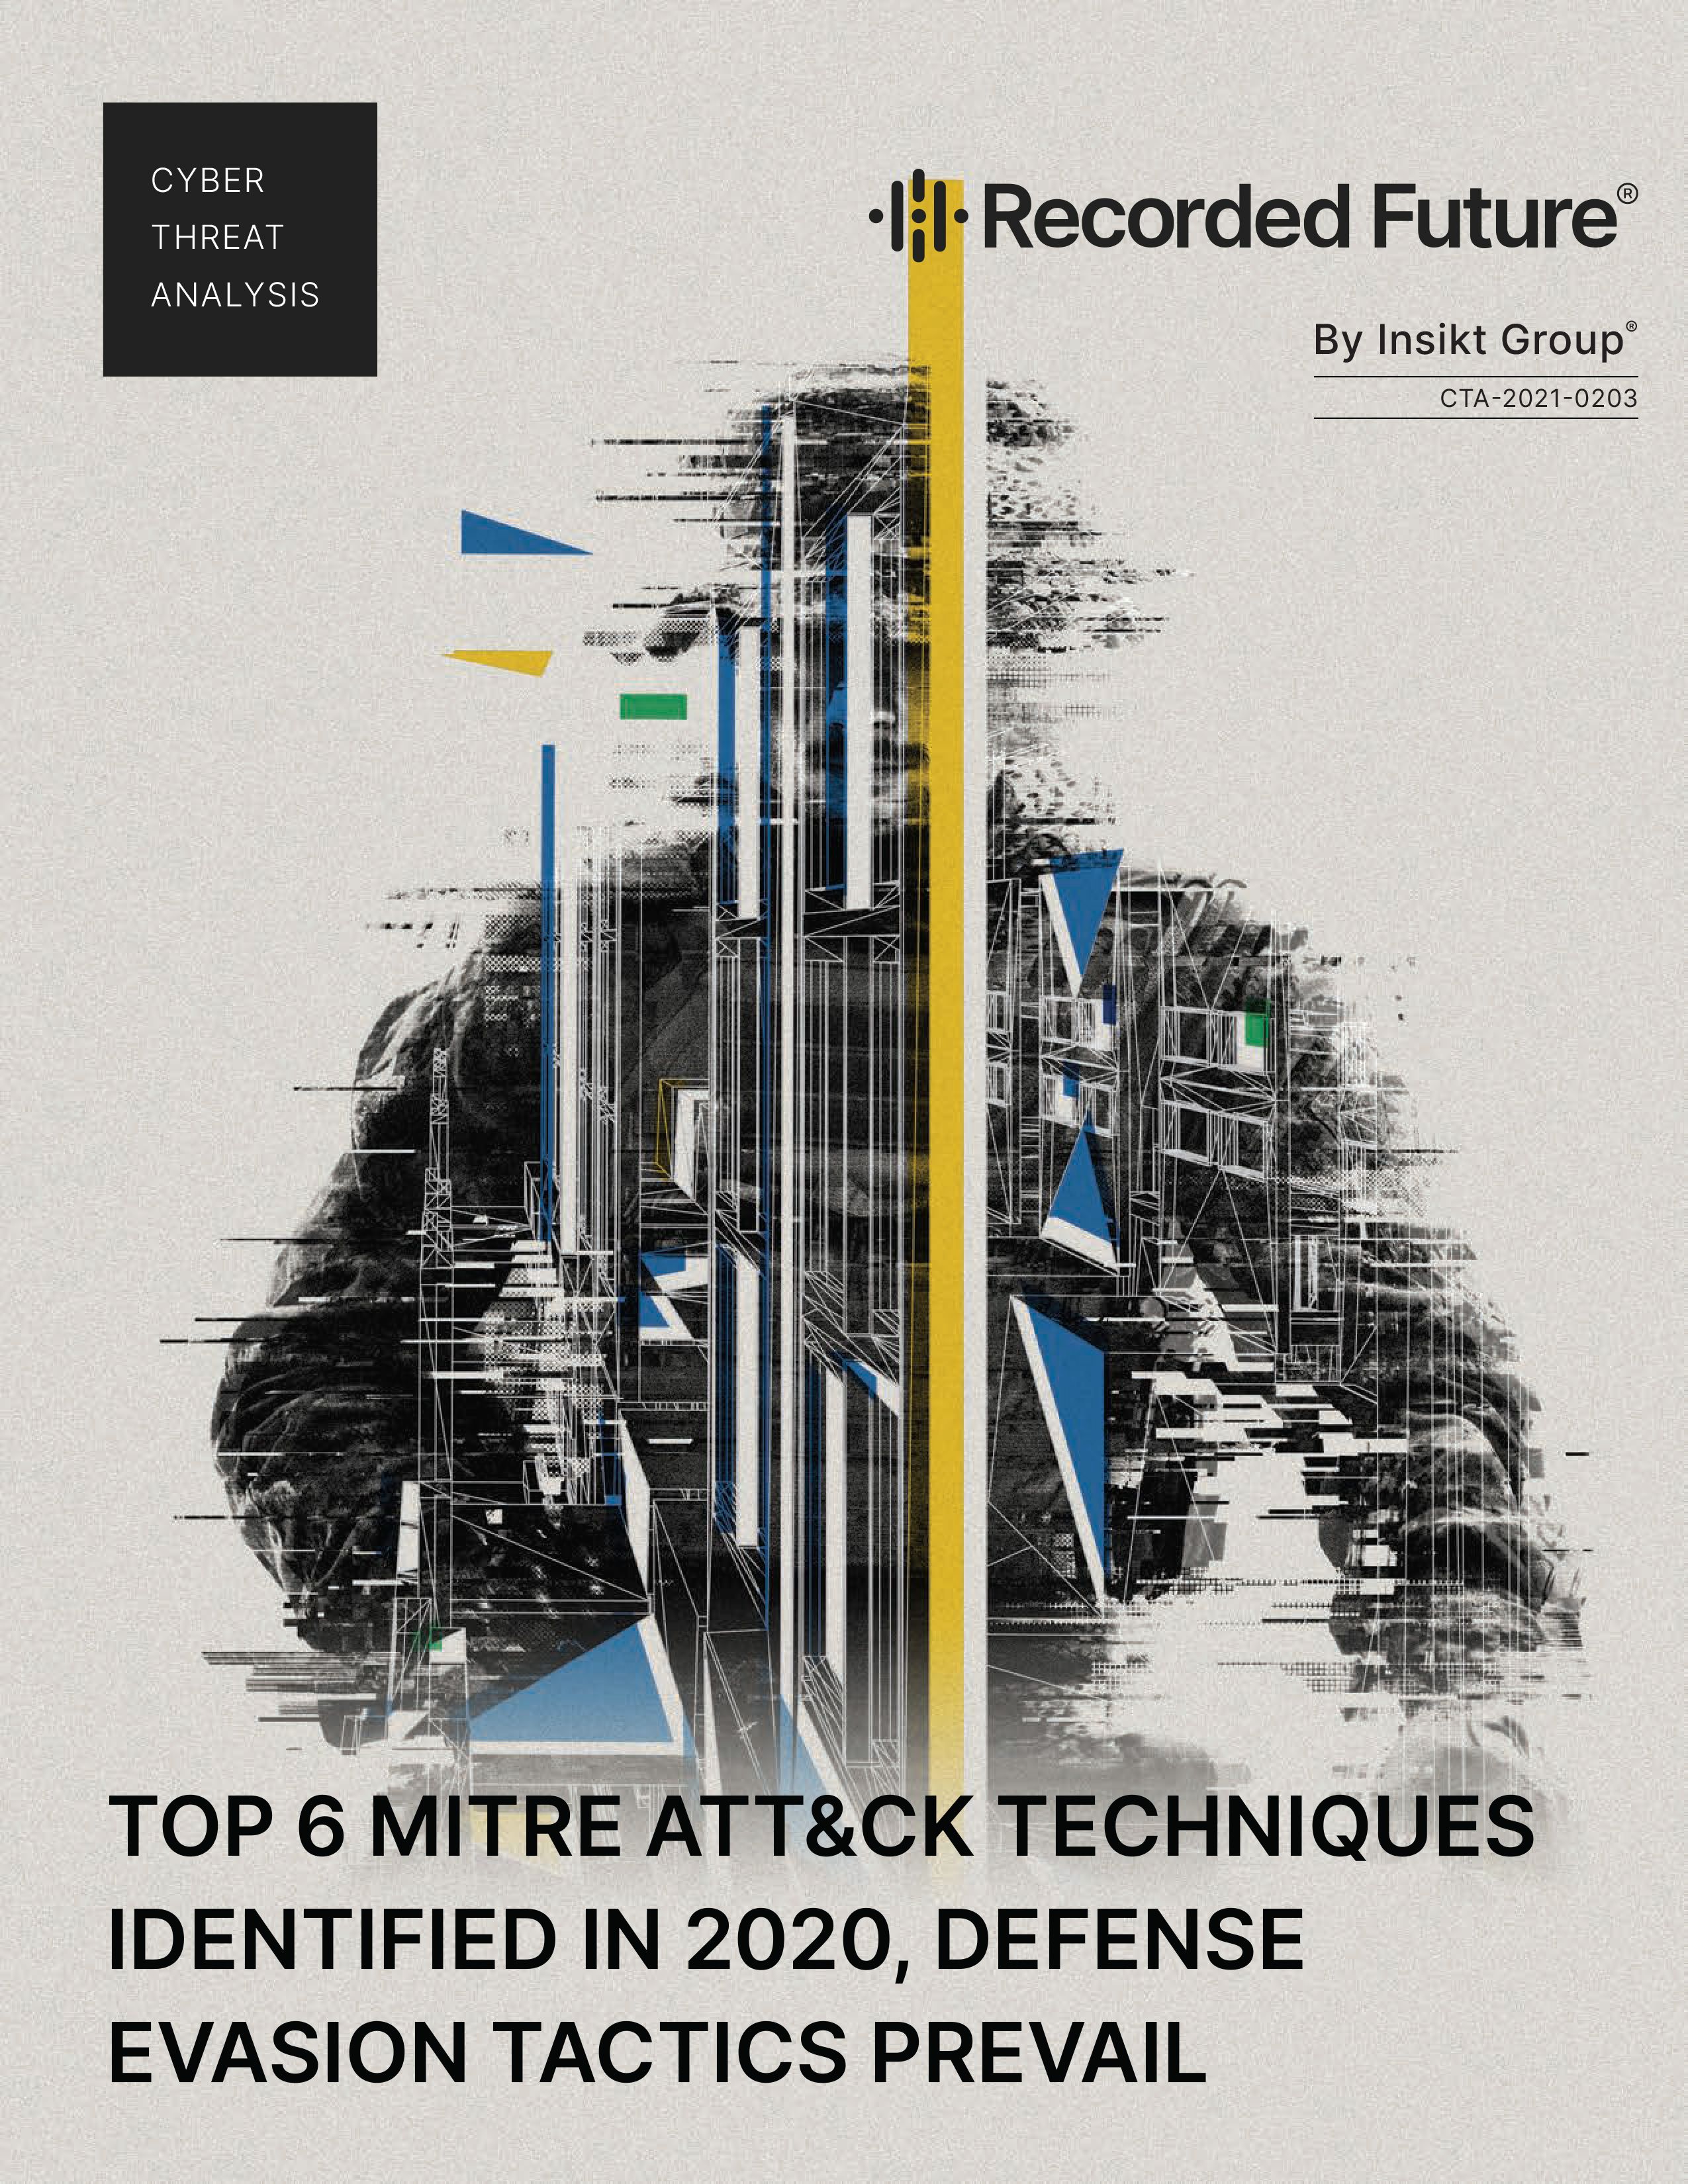 Top 6 MITRE ATT&CK Techniques Identified in 2020, Defense Evasion Tactics Prevail